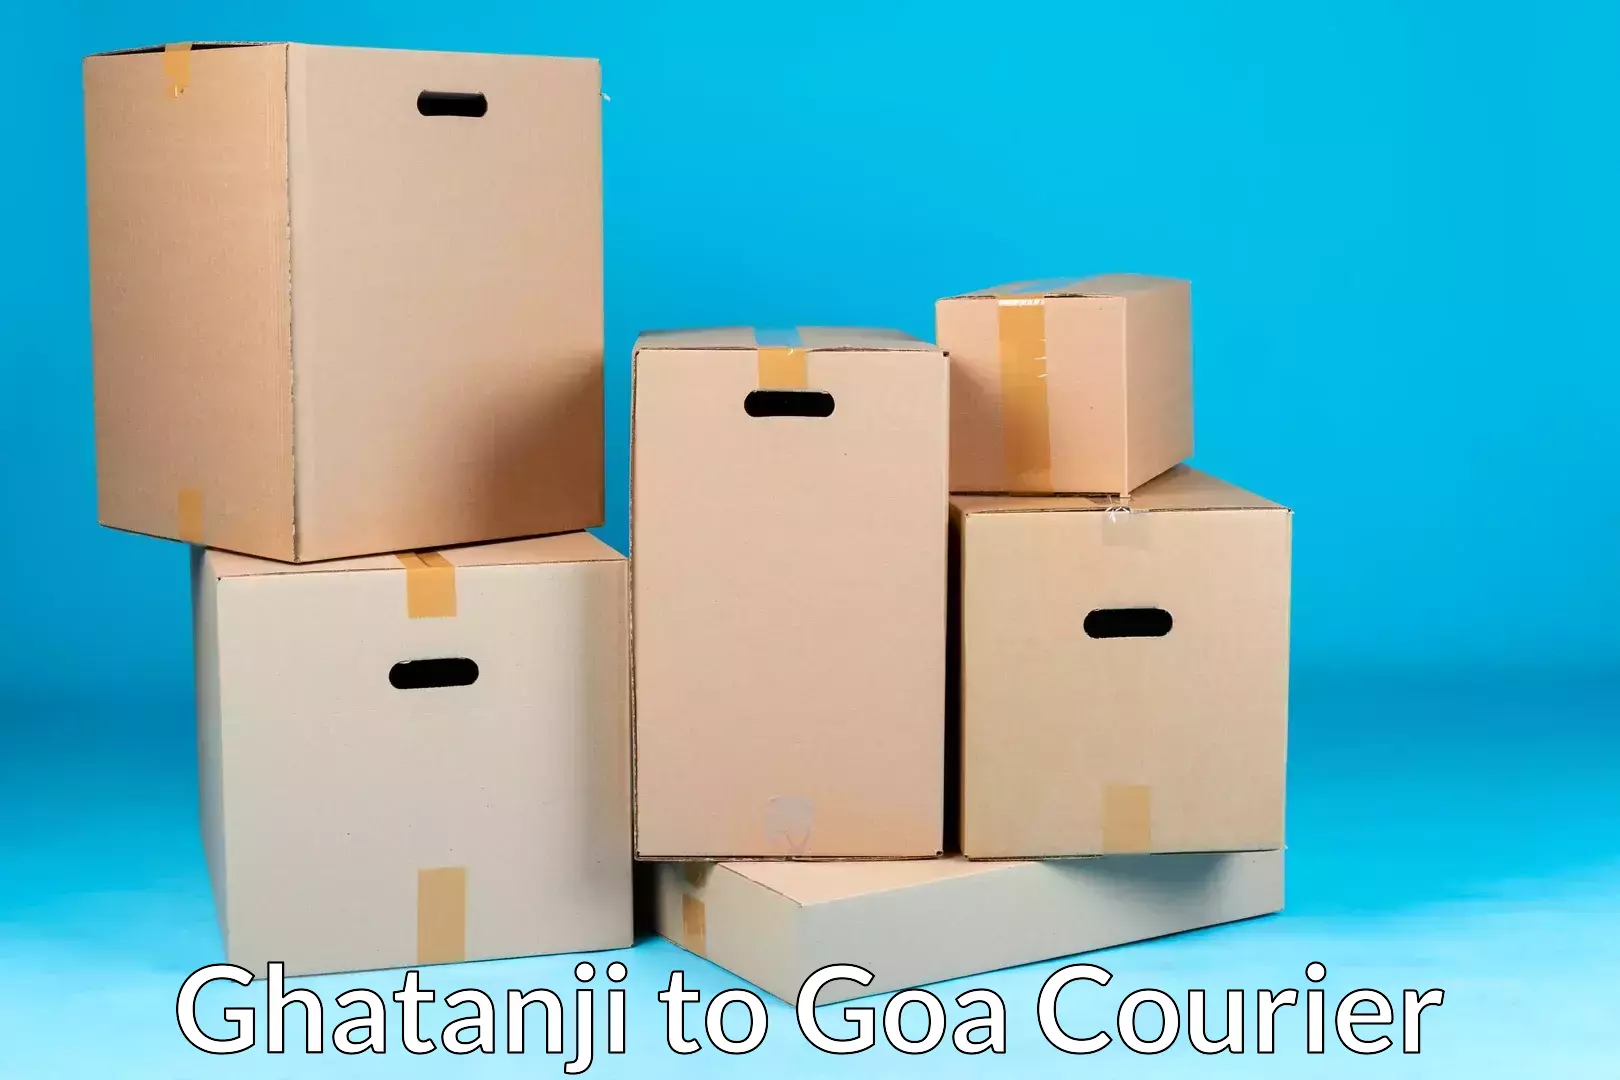 Furniture delivery service Ghatanji to Goa